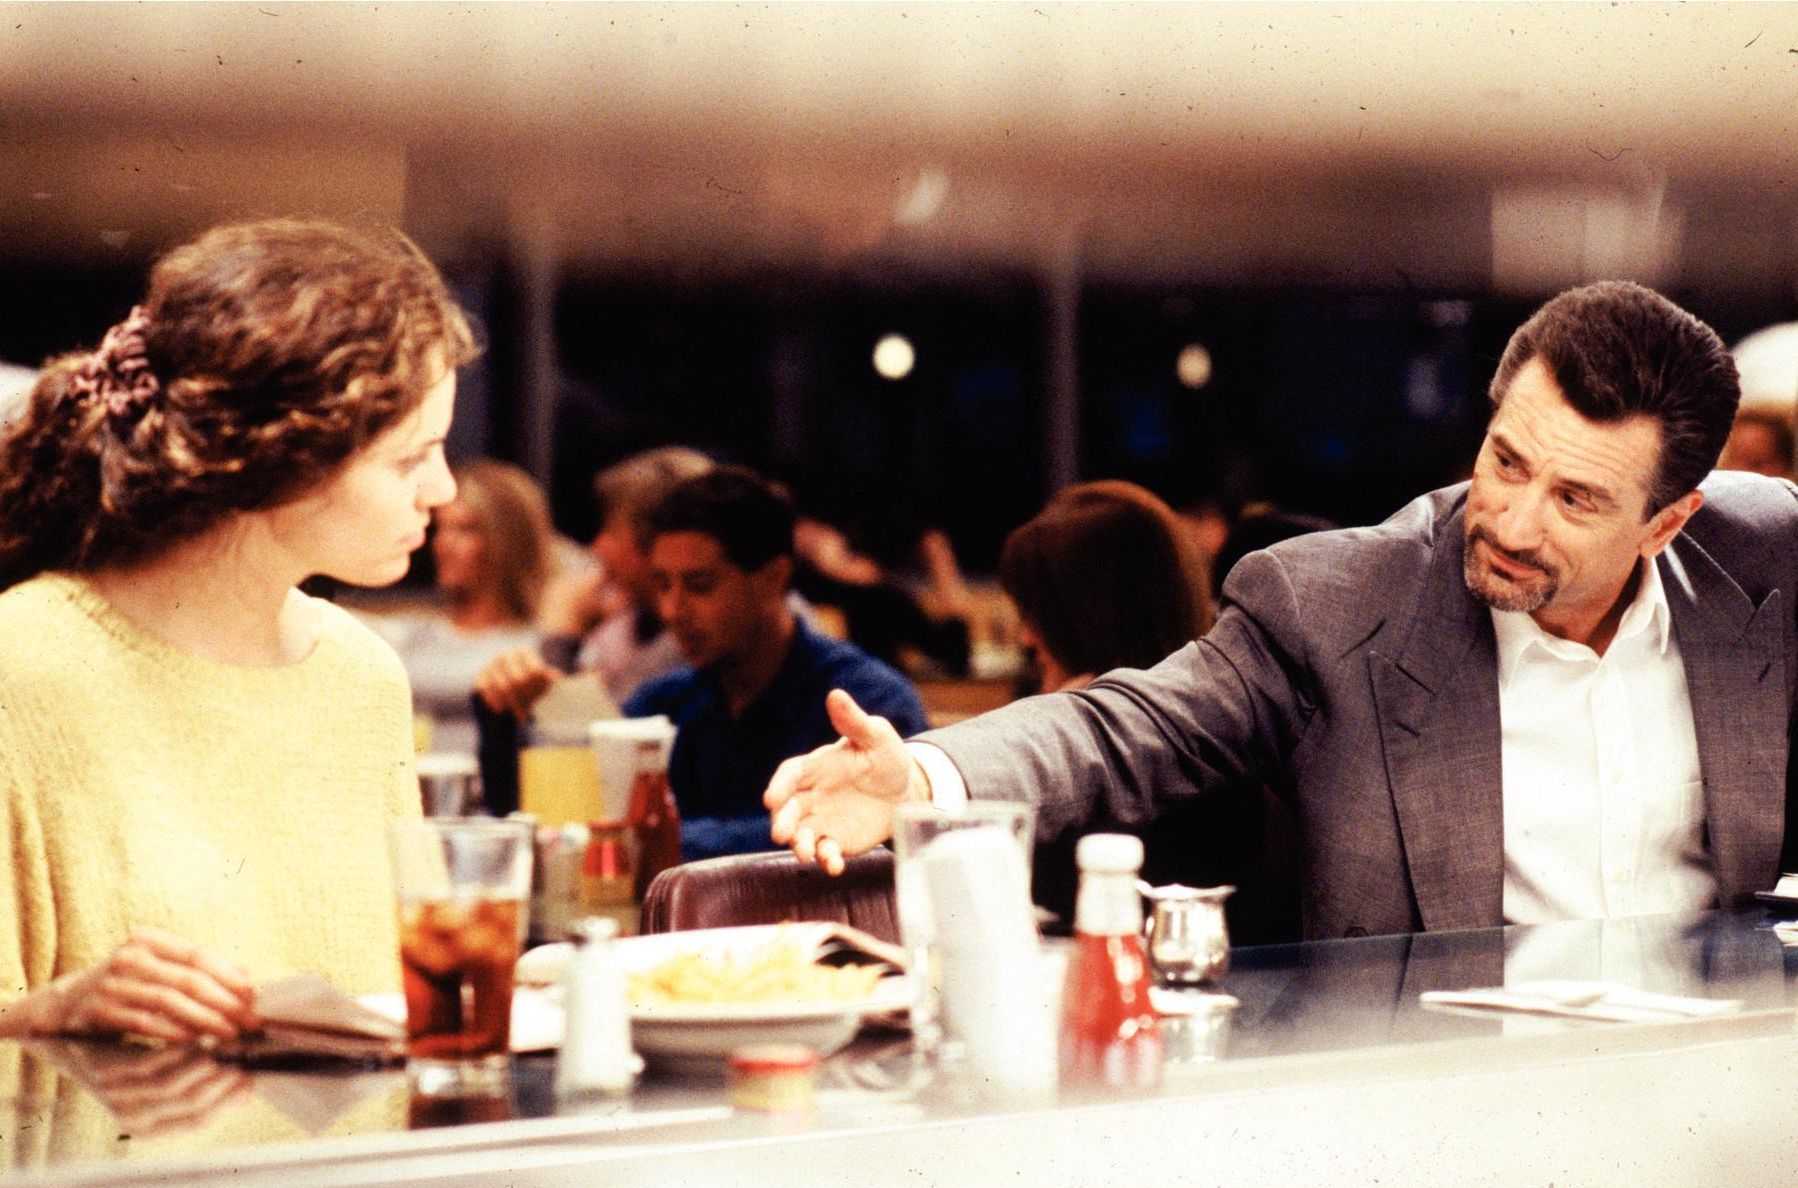 Still of Robert De Niro and Amy Brenneman in Heat (1995)